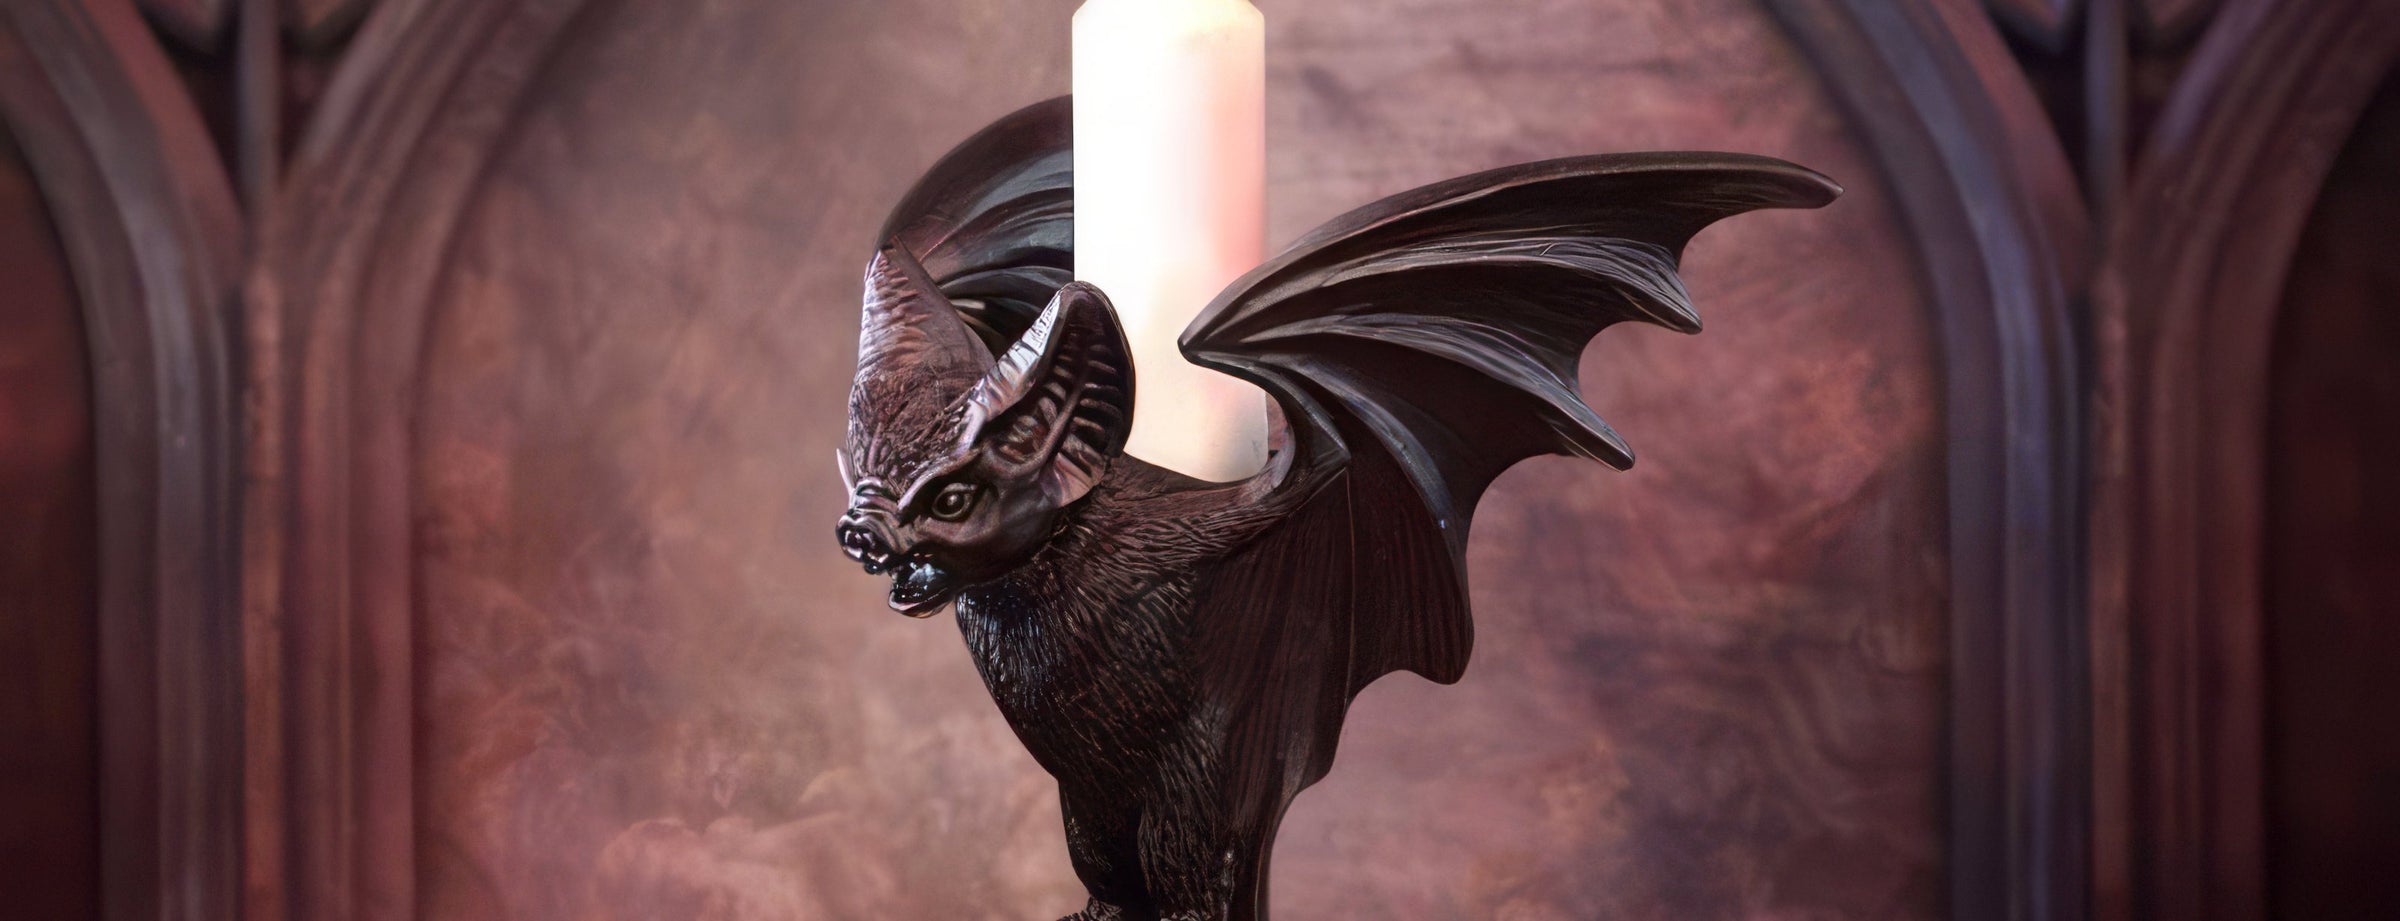 Bat candlestick